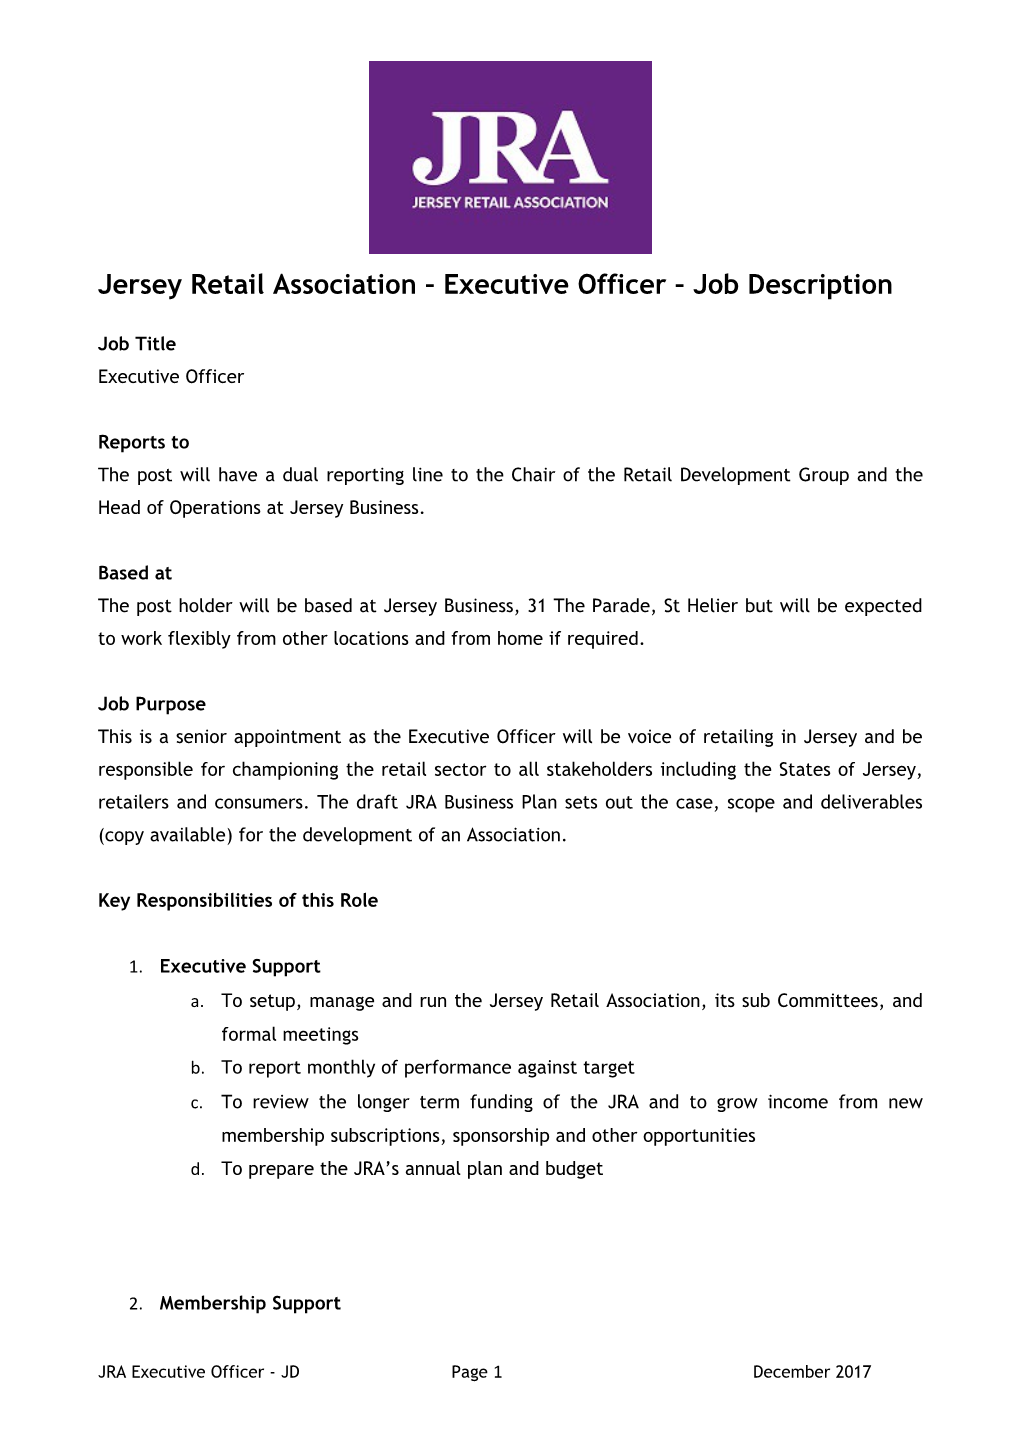 Jersey Retail Association Executive Officer Job Description